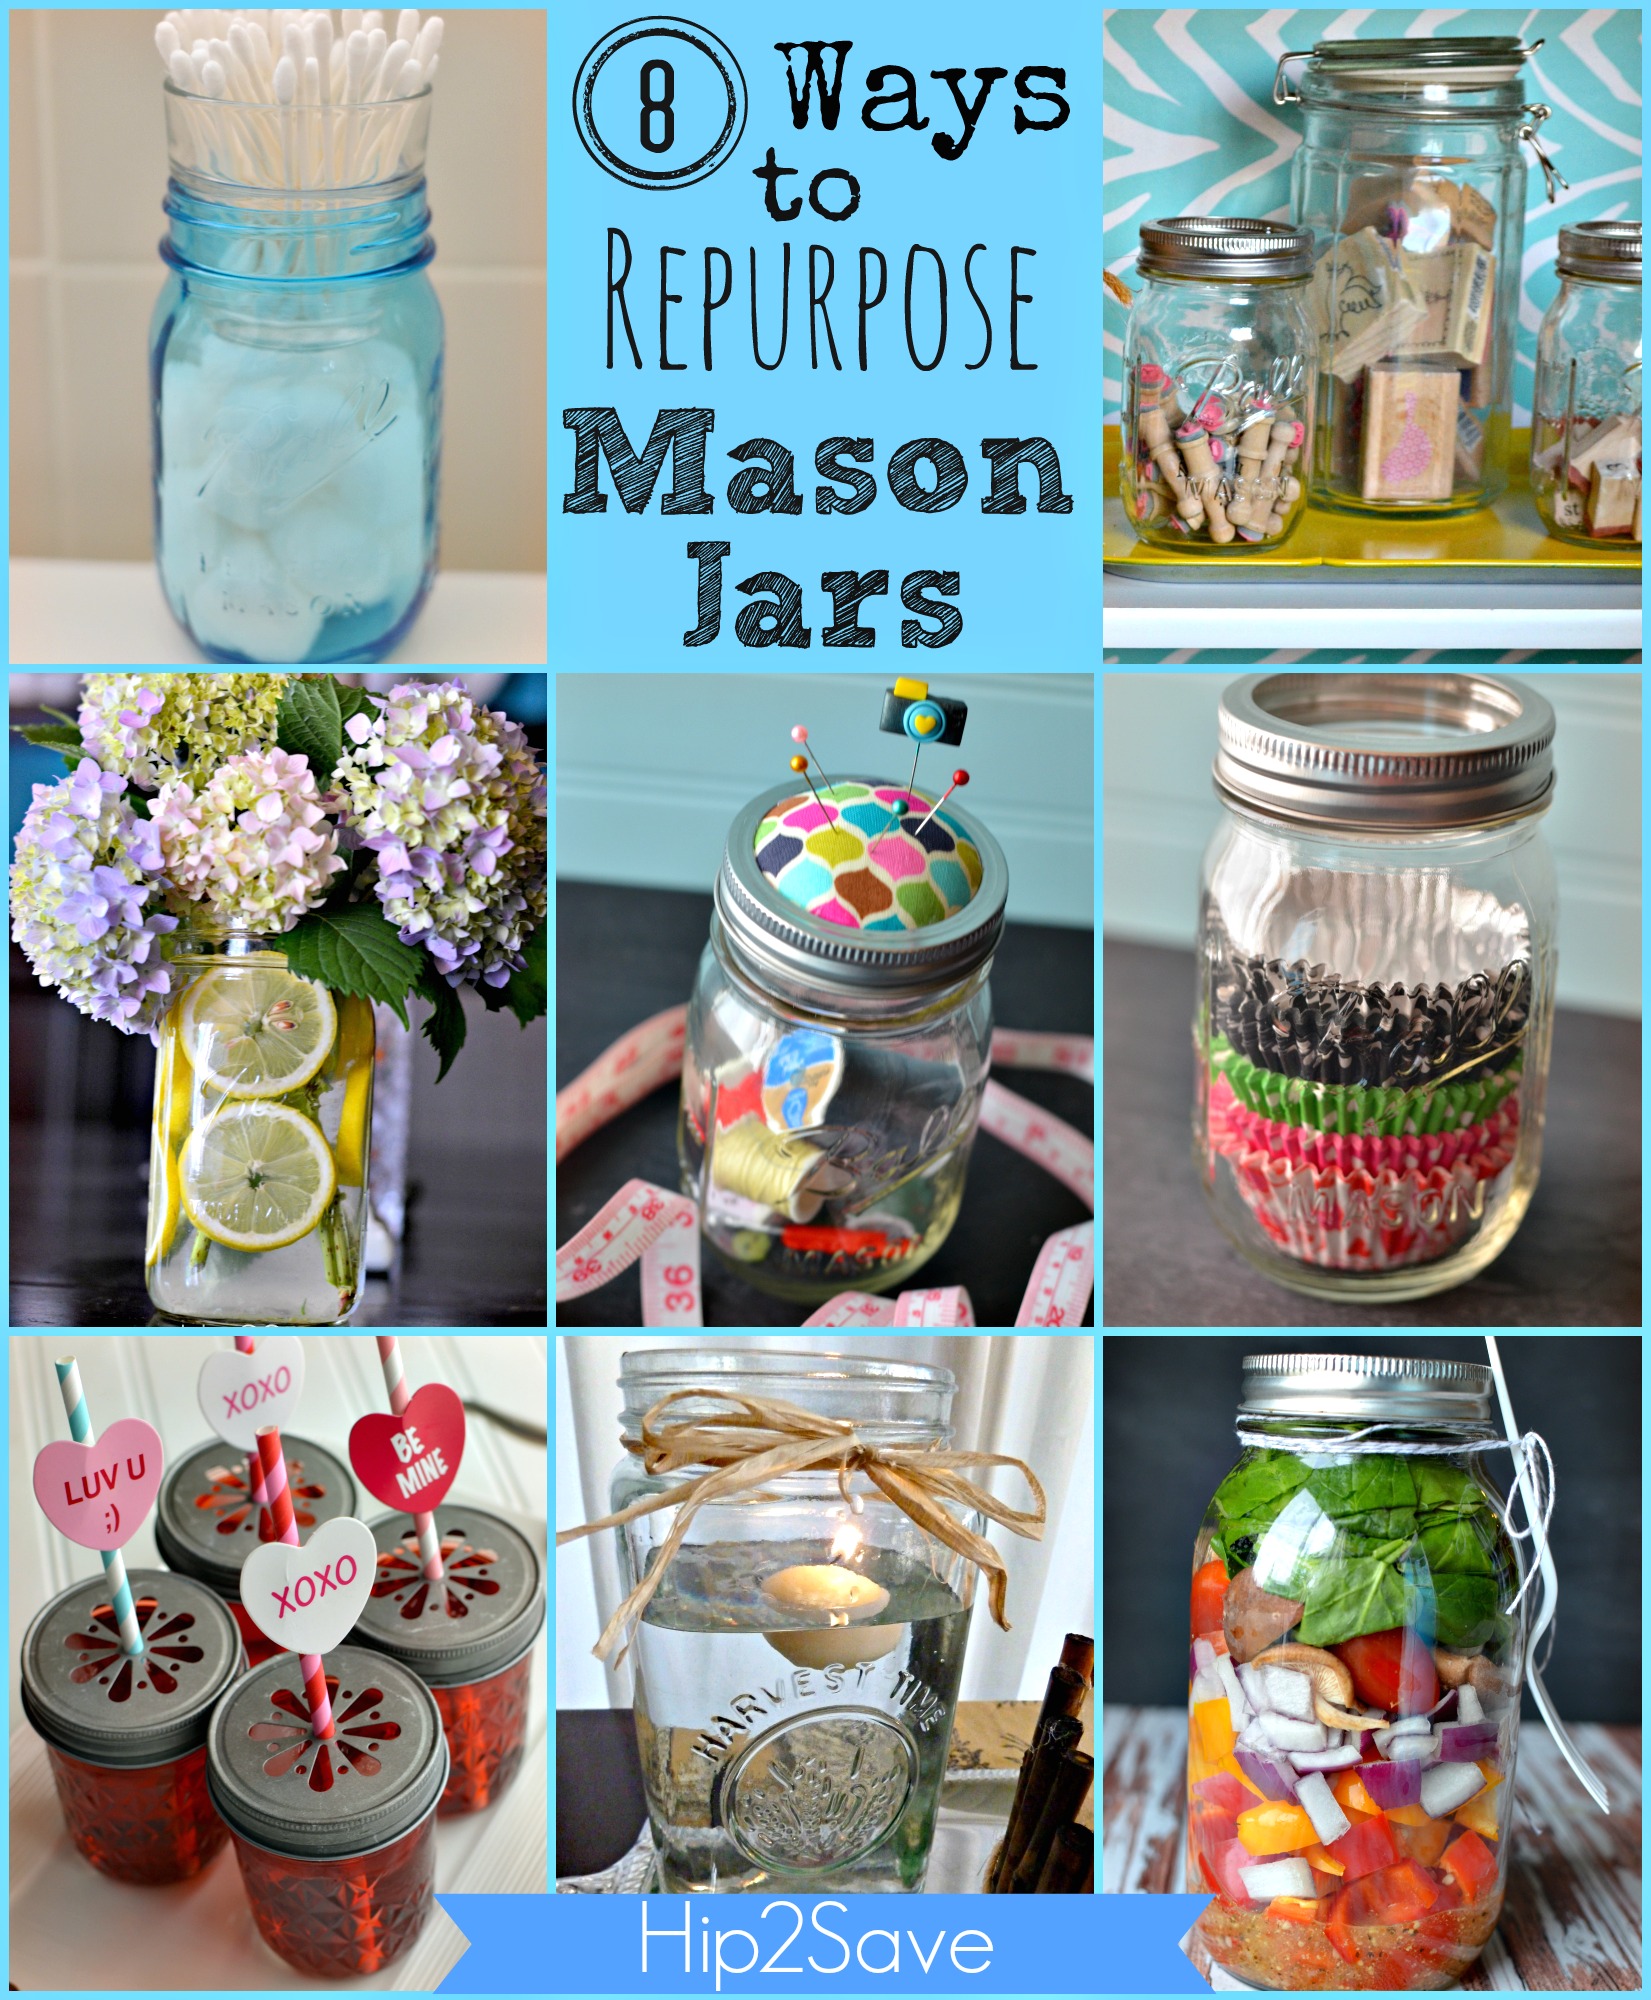 https://hip2save.com/wp-content/uploads/2014/03/great-ideas-8-ways-to-repurpose-mason-jars.jpg